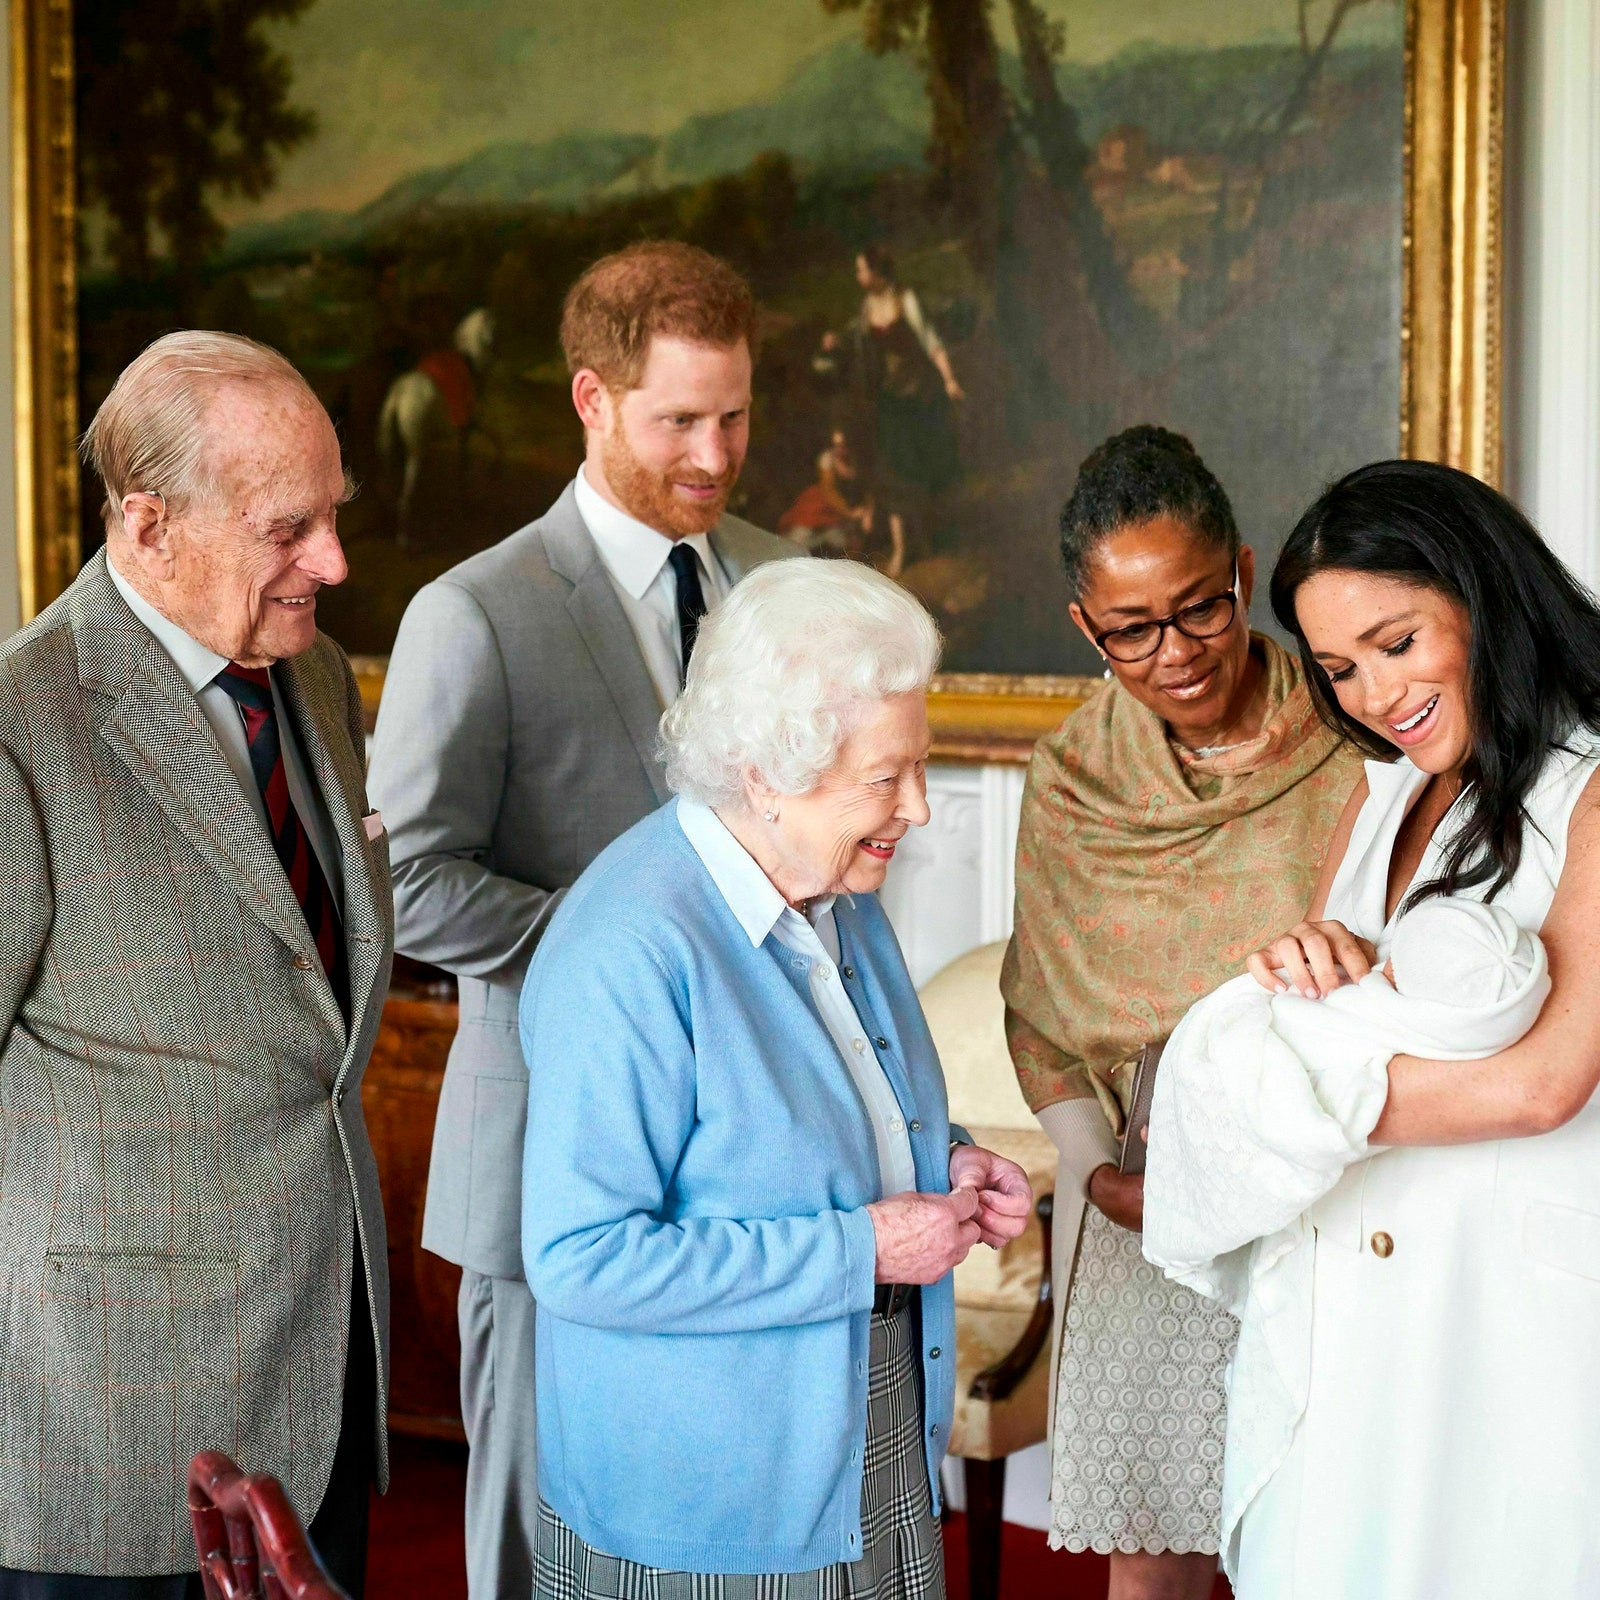 Принц Филипп королева Елизавета II принц Гарри Дория Рагланд и Меган Маркл